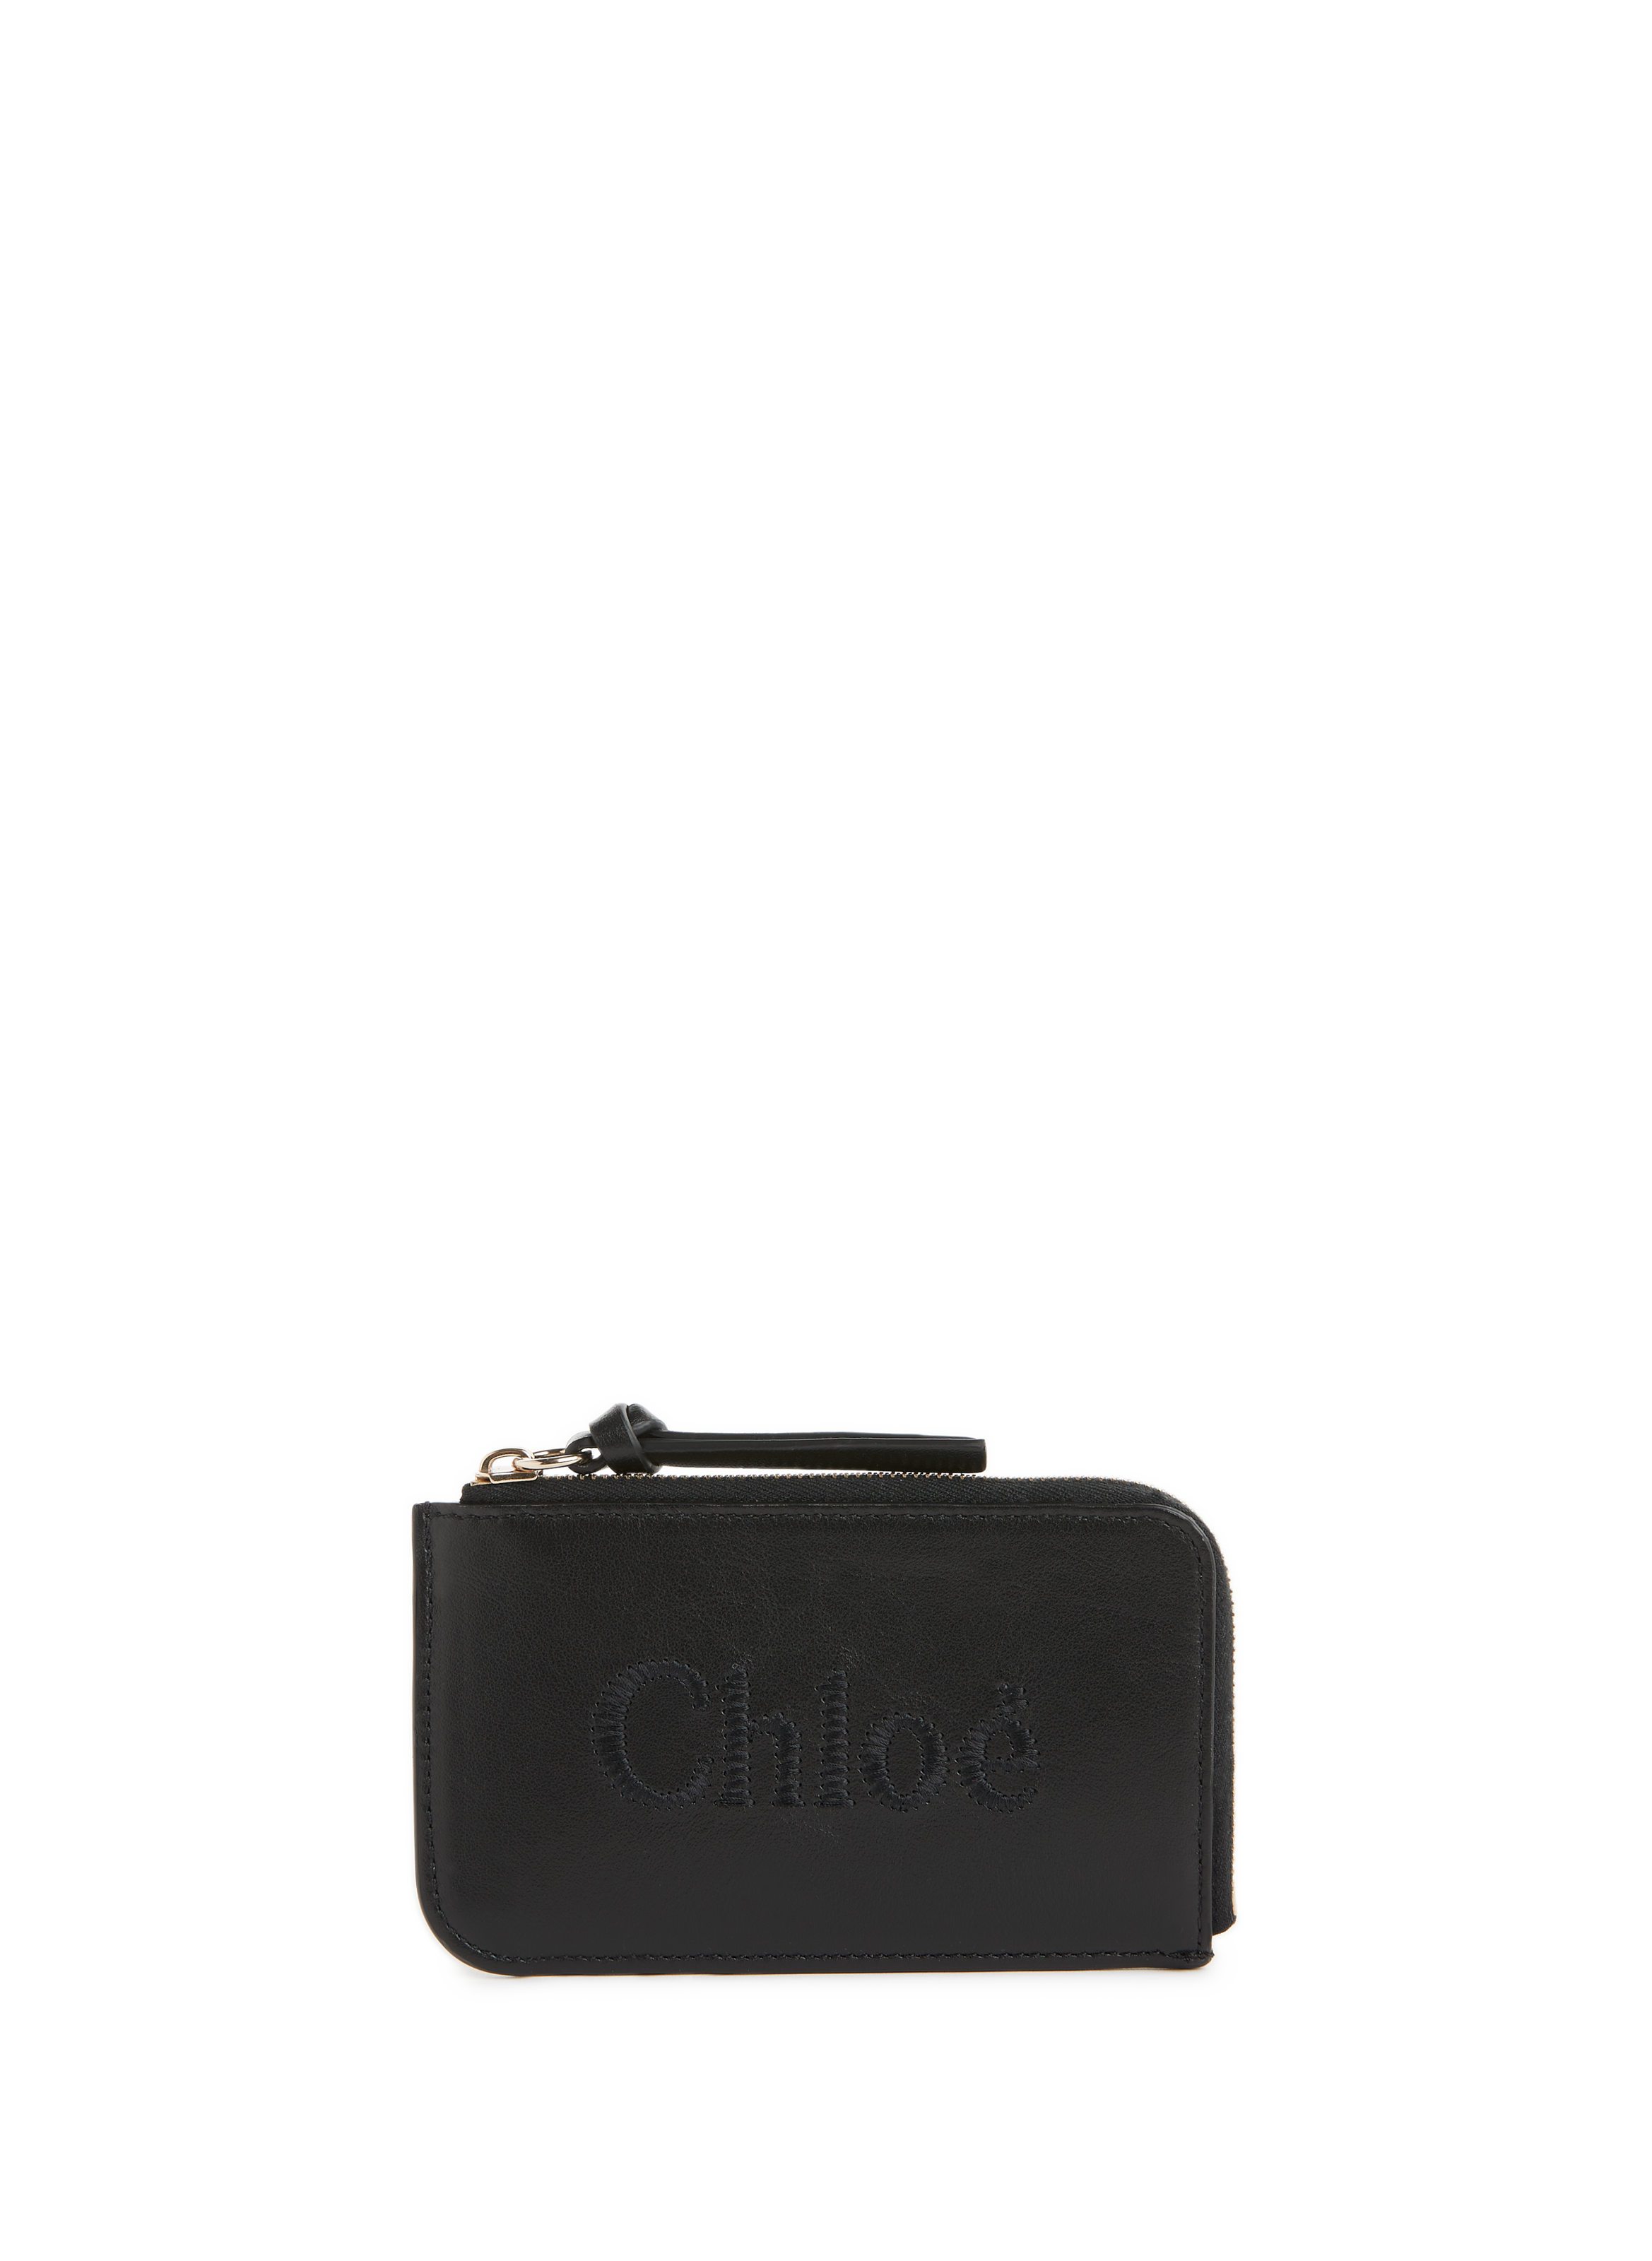 Chloe Faye black leather suede ring chain detail shoulder handbag purse |  eBay